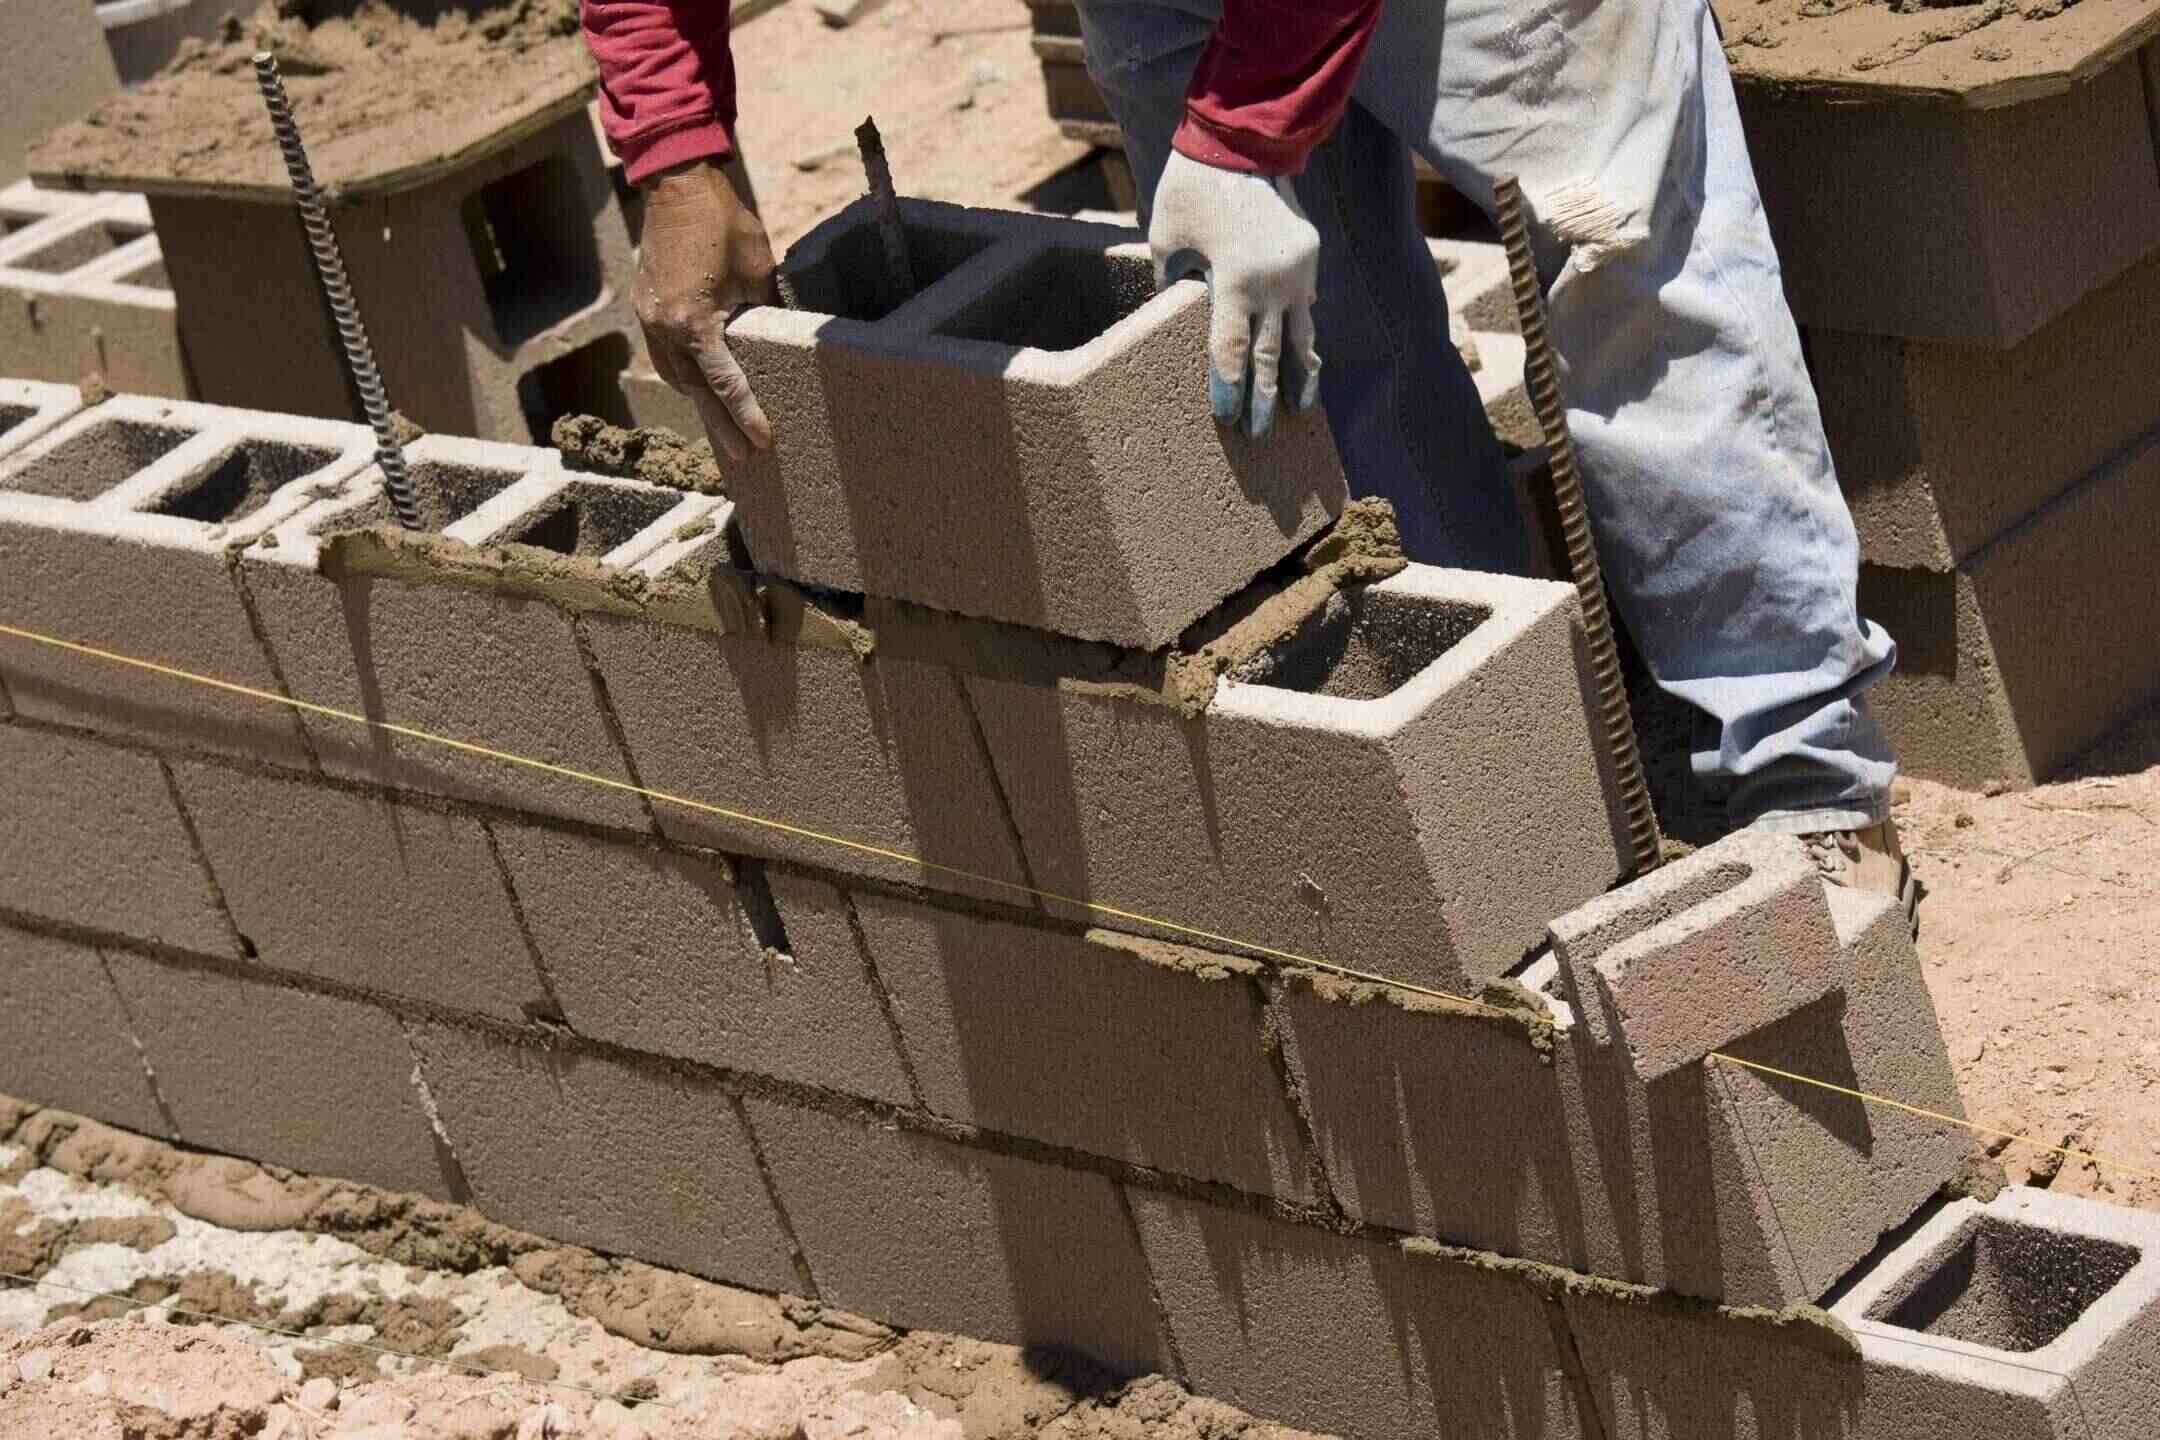 How To Build A Concrete Block Foundation